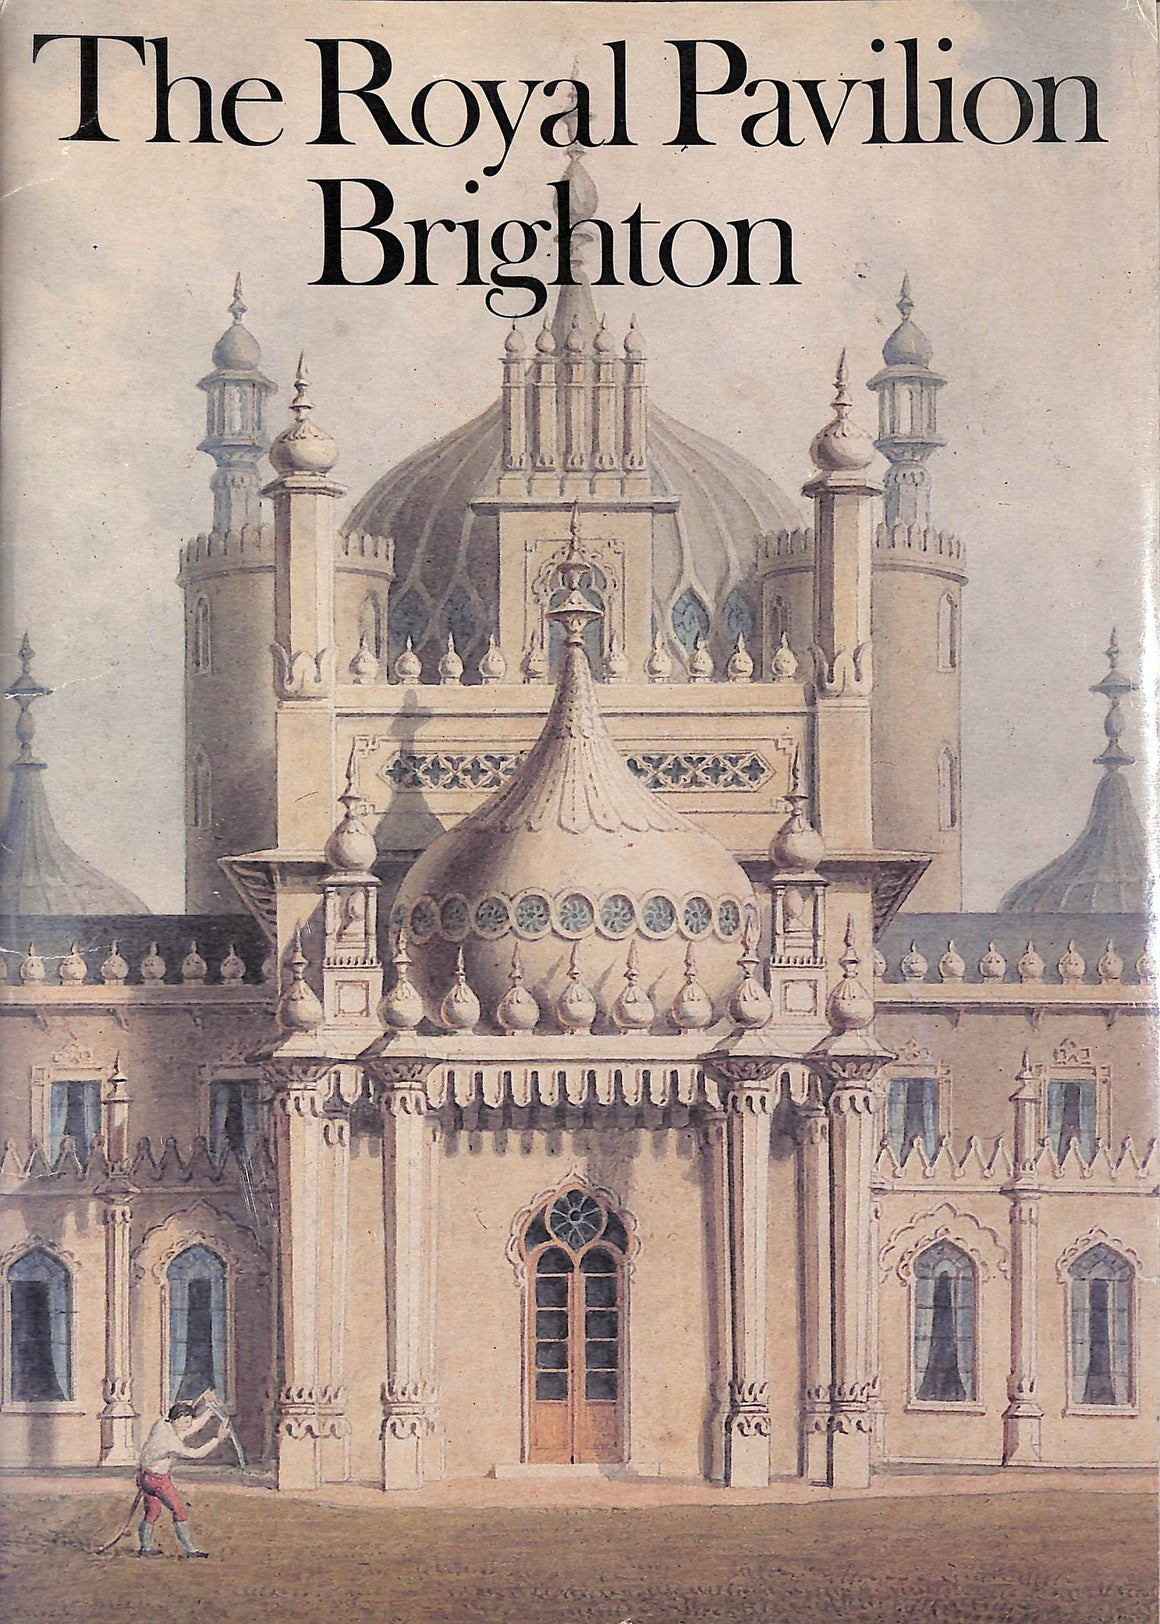 "The Royal Pavilon Brighton"